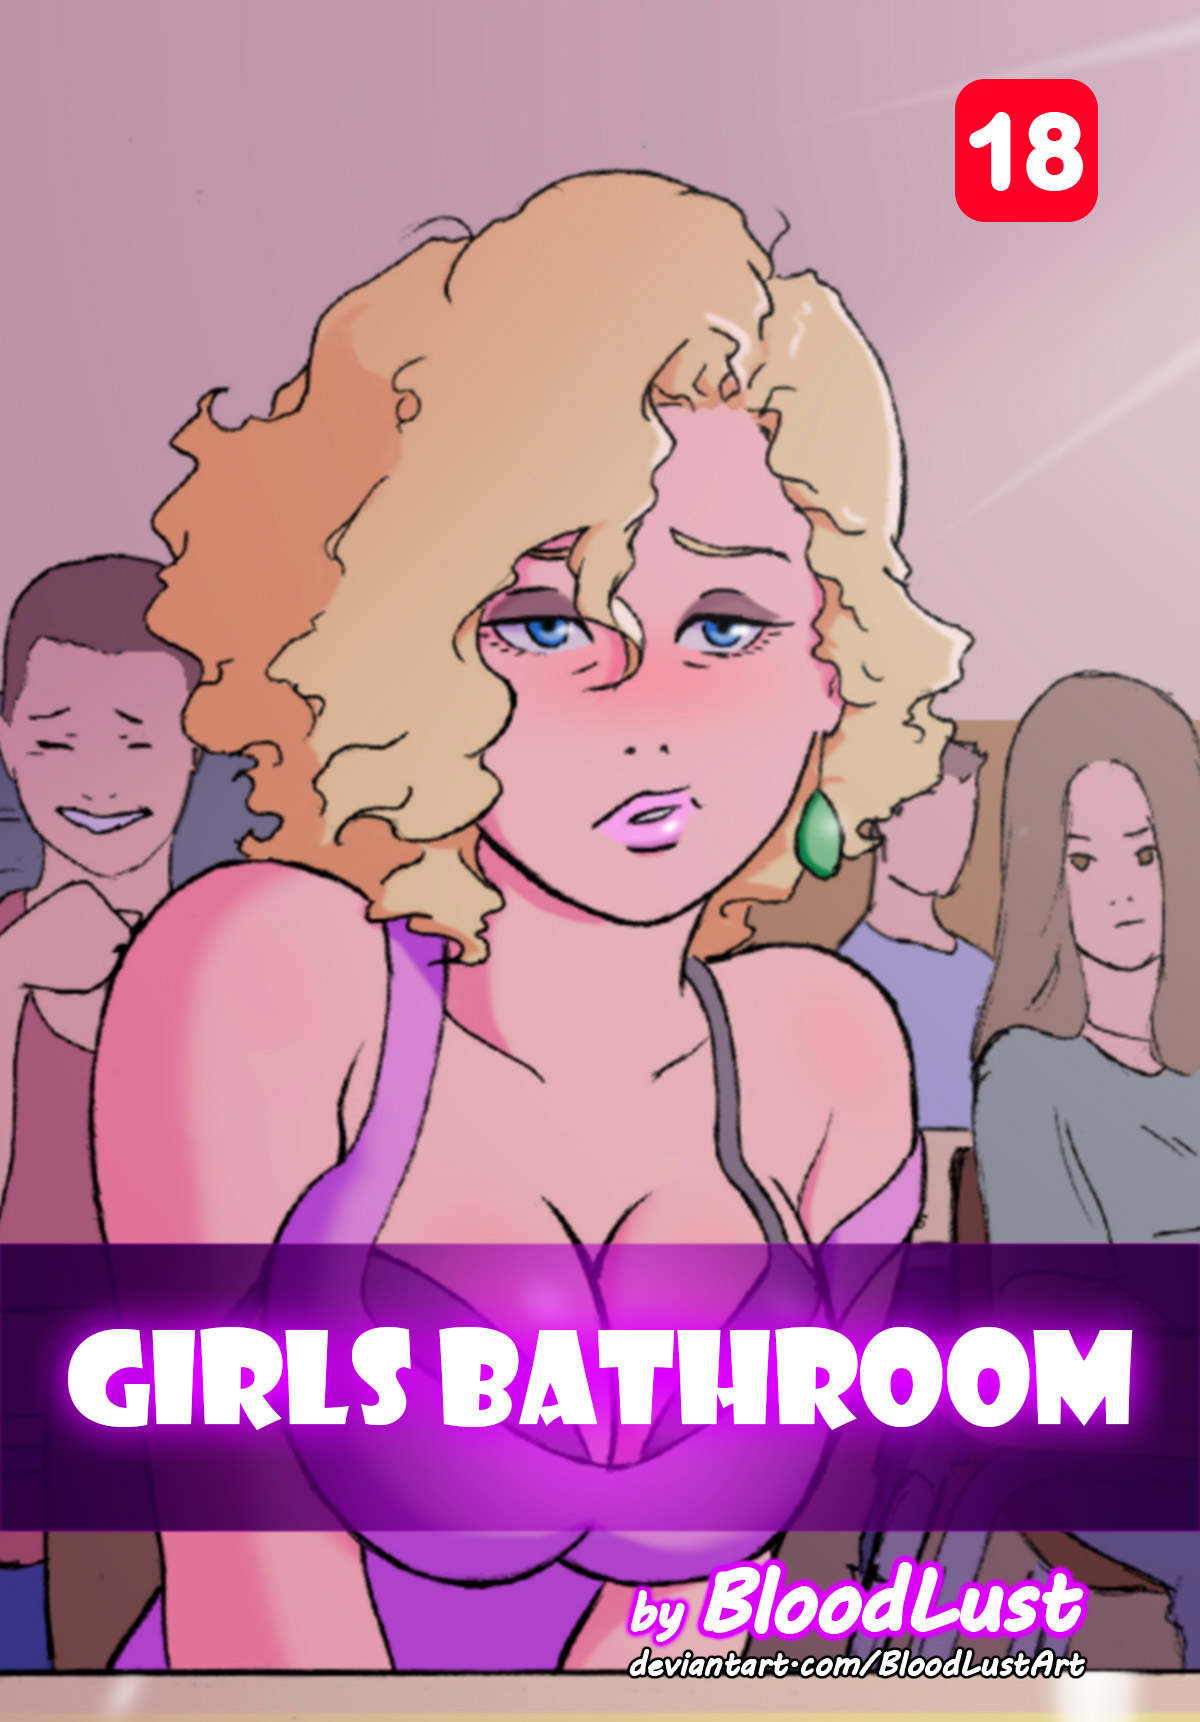 Girls BATHROOM